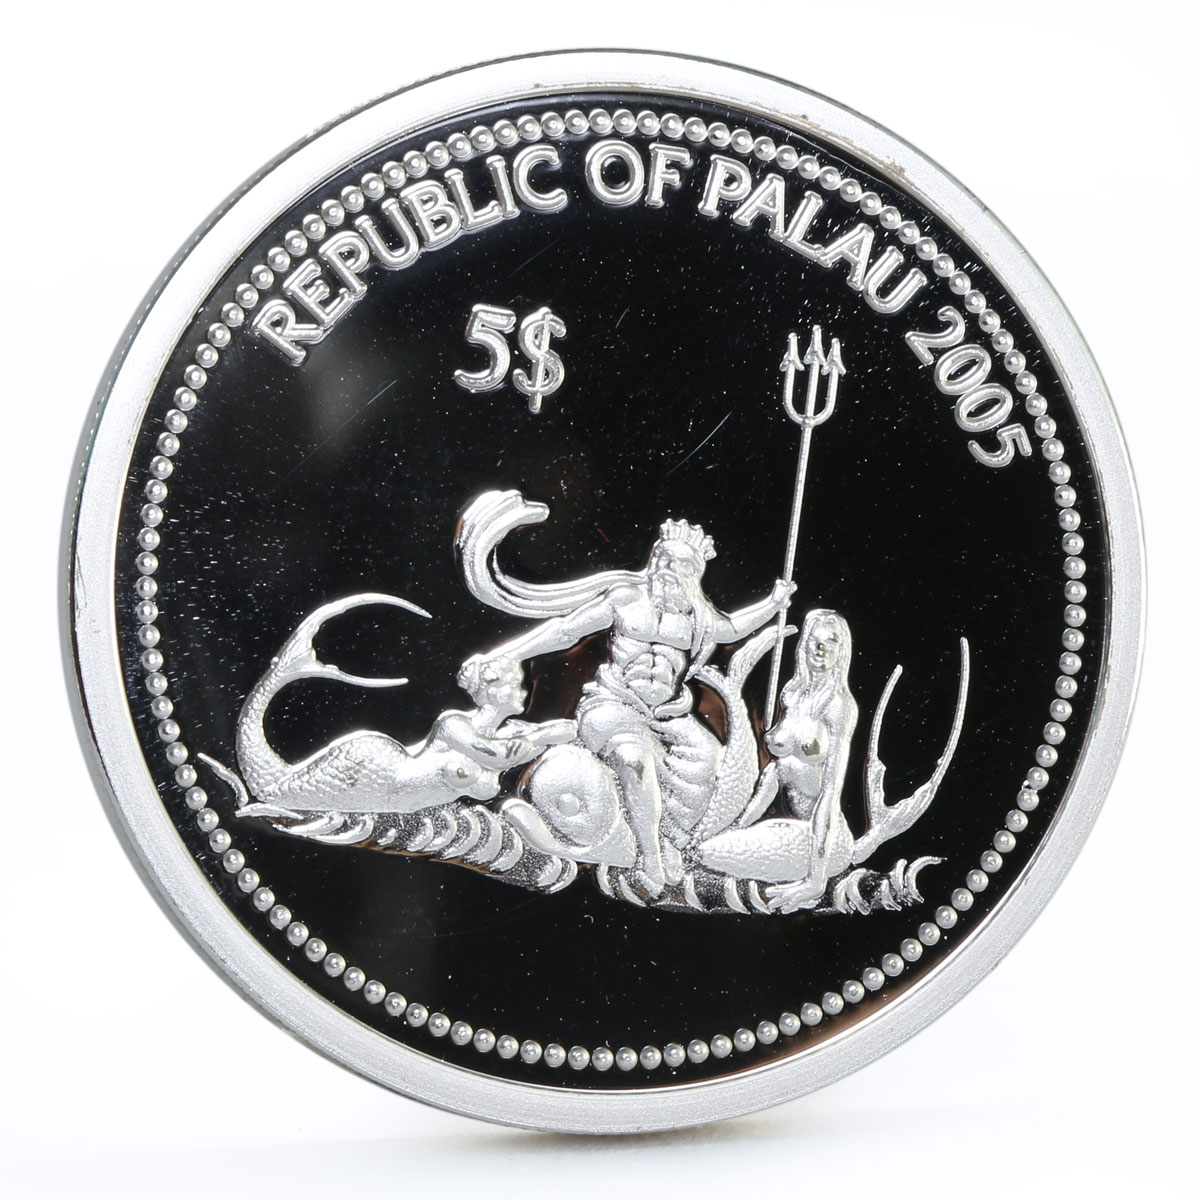 Palau 5 dollars Marine Life Protection series Lionfish silver coin 2005